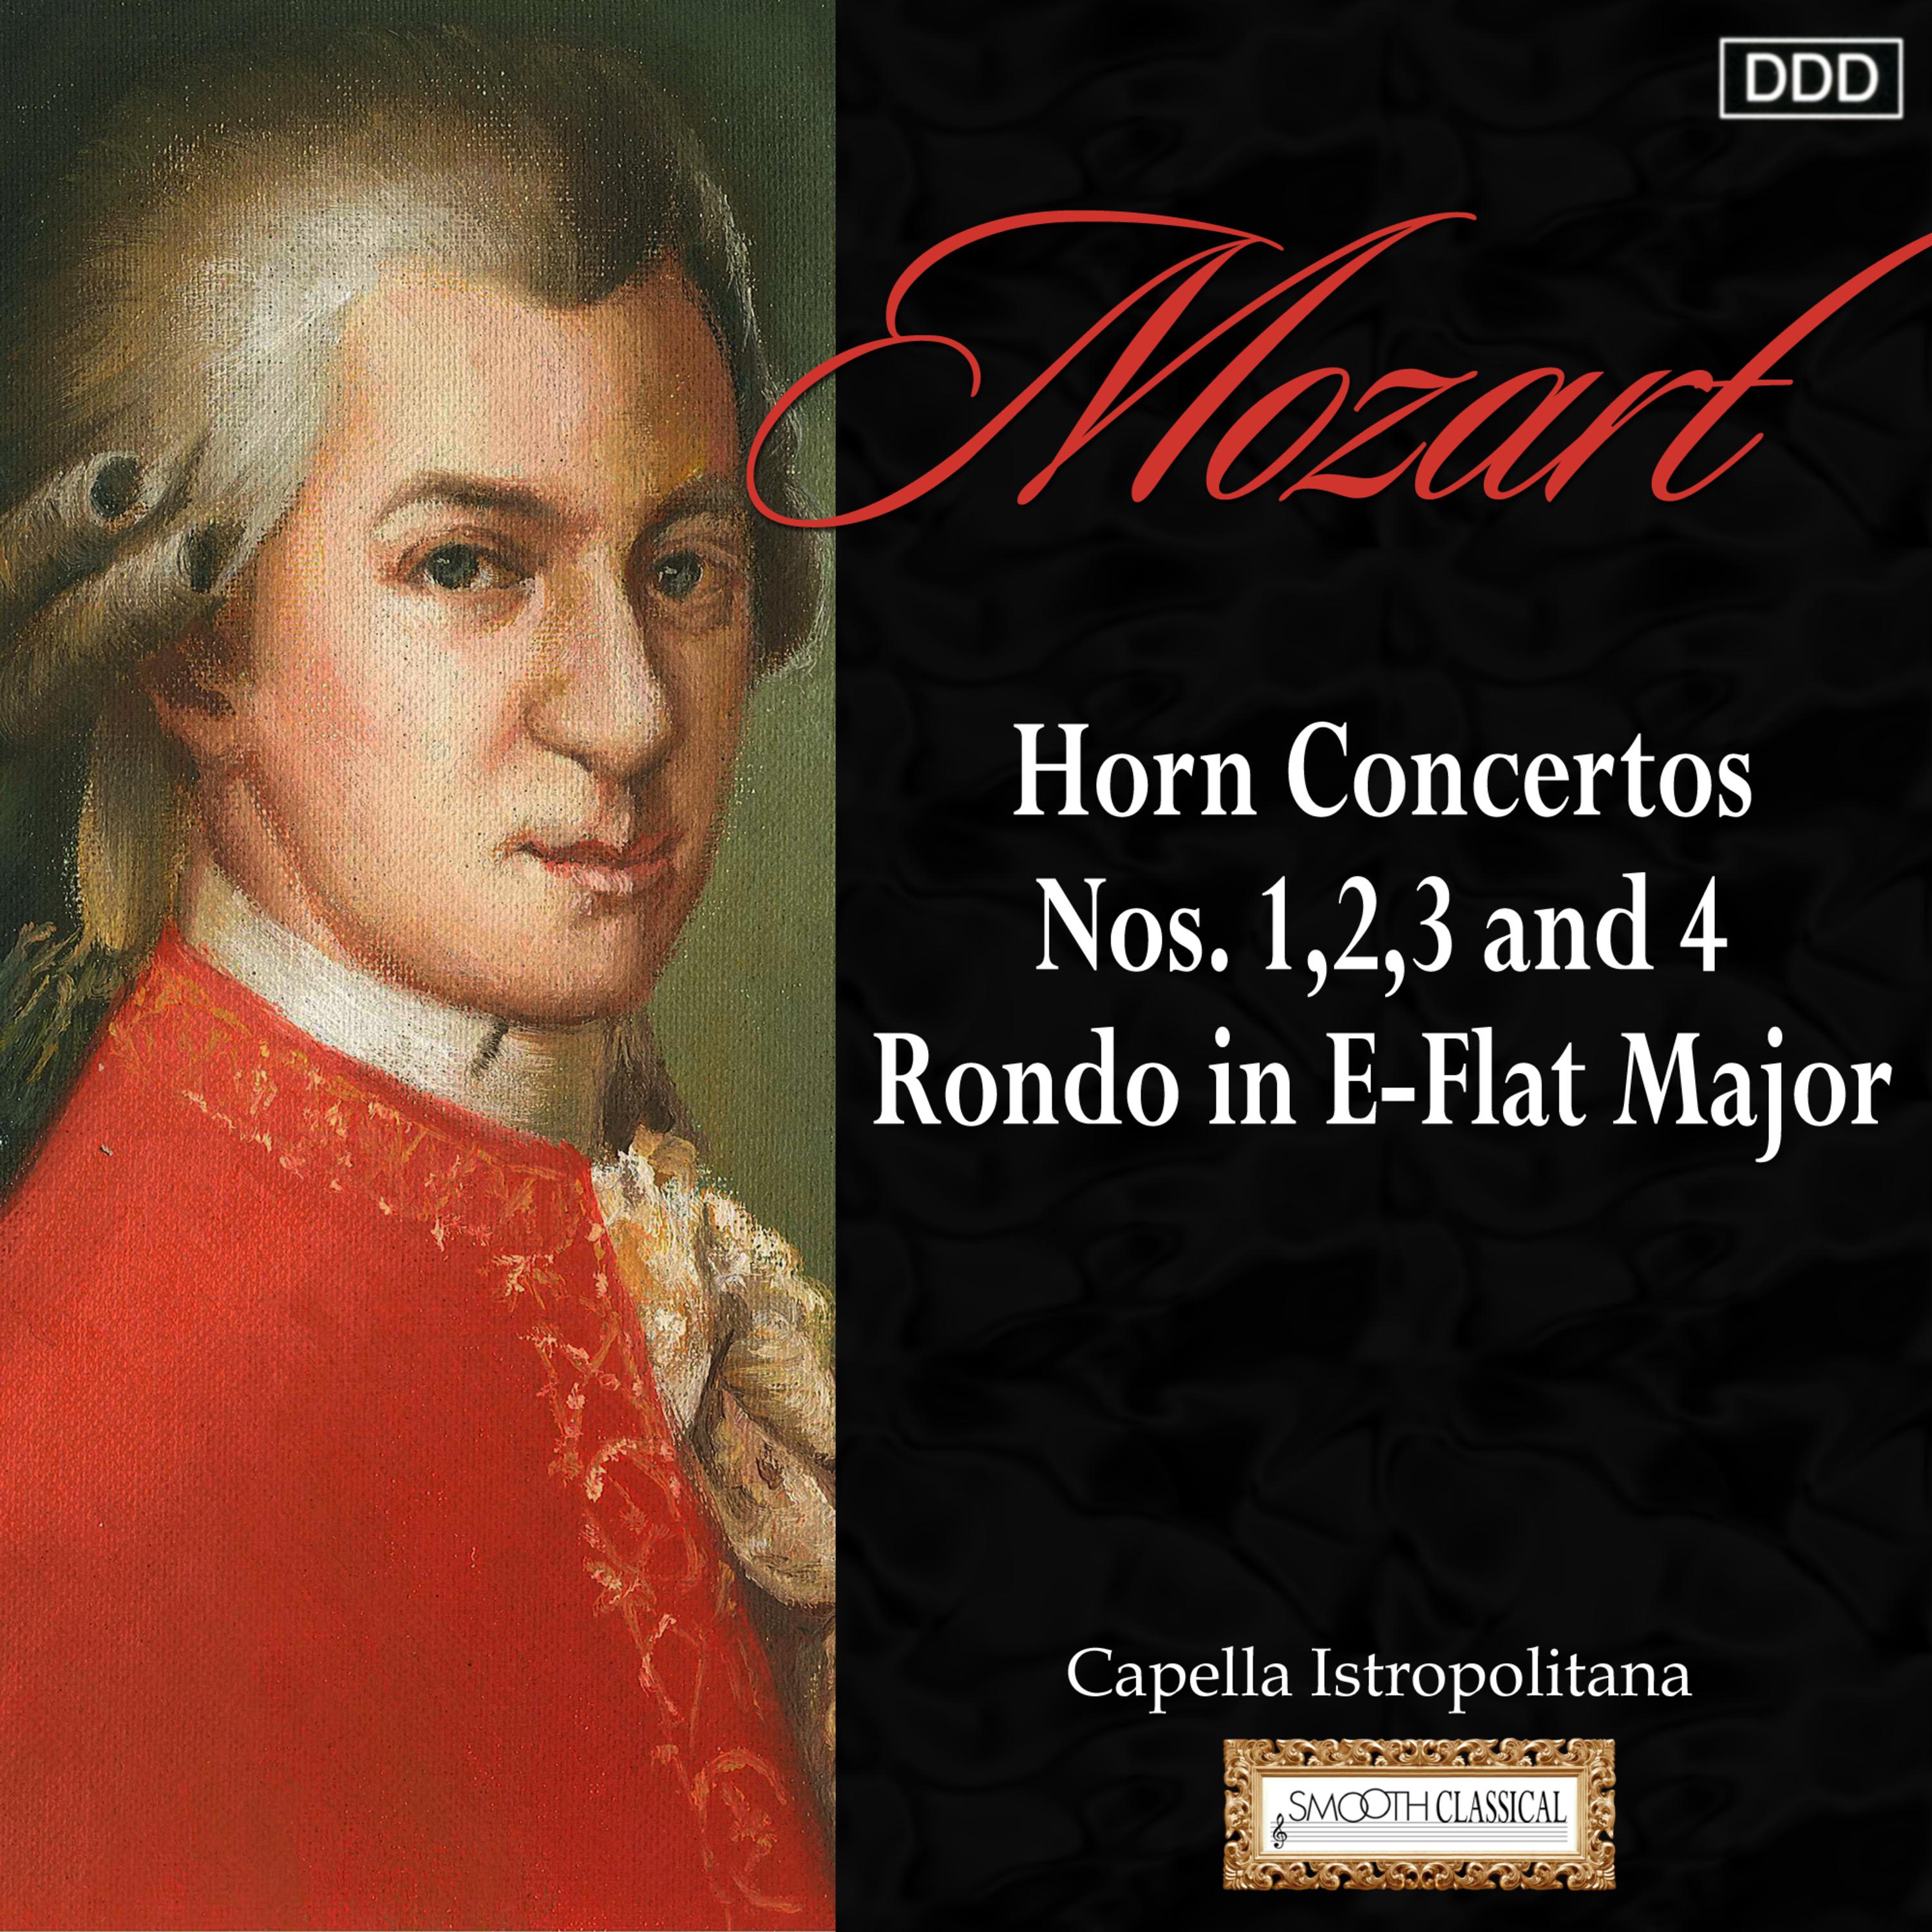 Horn Concerto No. 3 in E-Flat Major, K. 447: I. Allegro